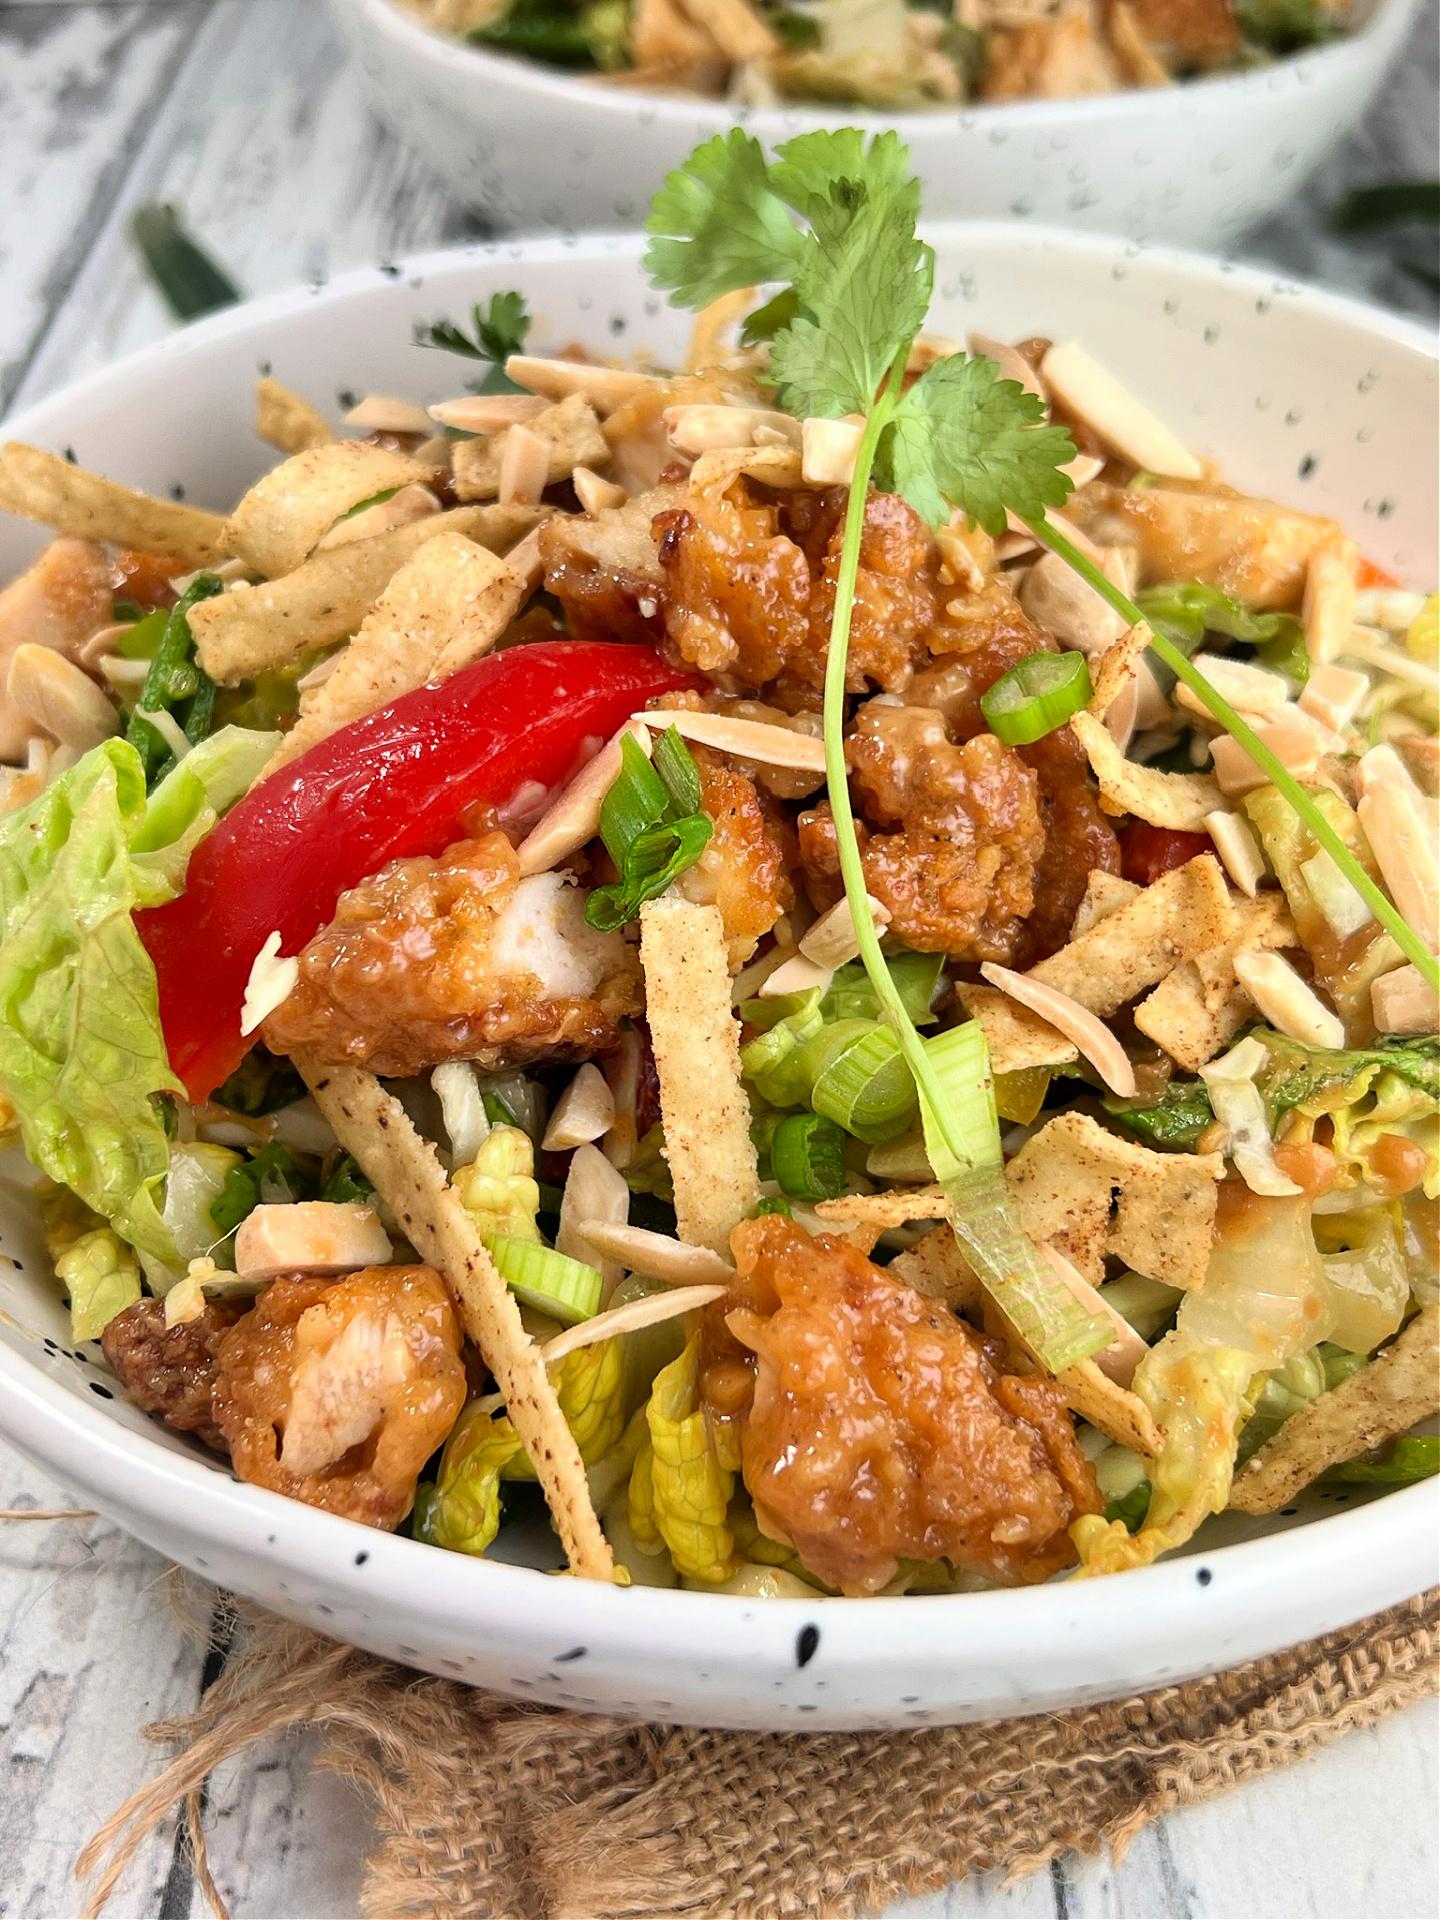 https://preventionrd.com/wp-content/uploads/2023/03/Crunchy-Thai-Chicken-Salad-with-Peanut-Dressing-1-1.jpg